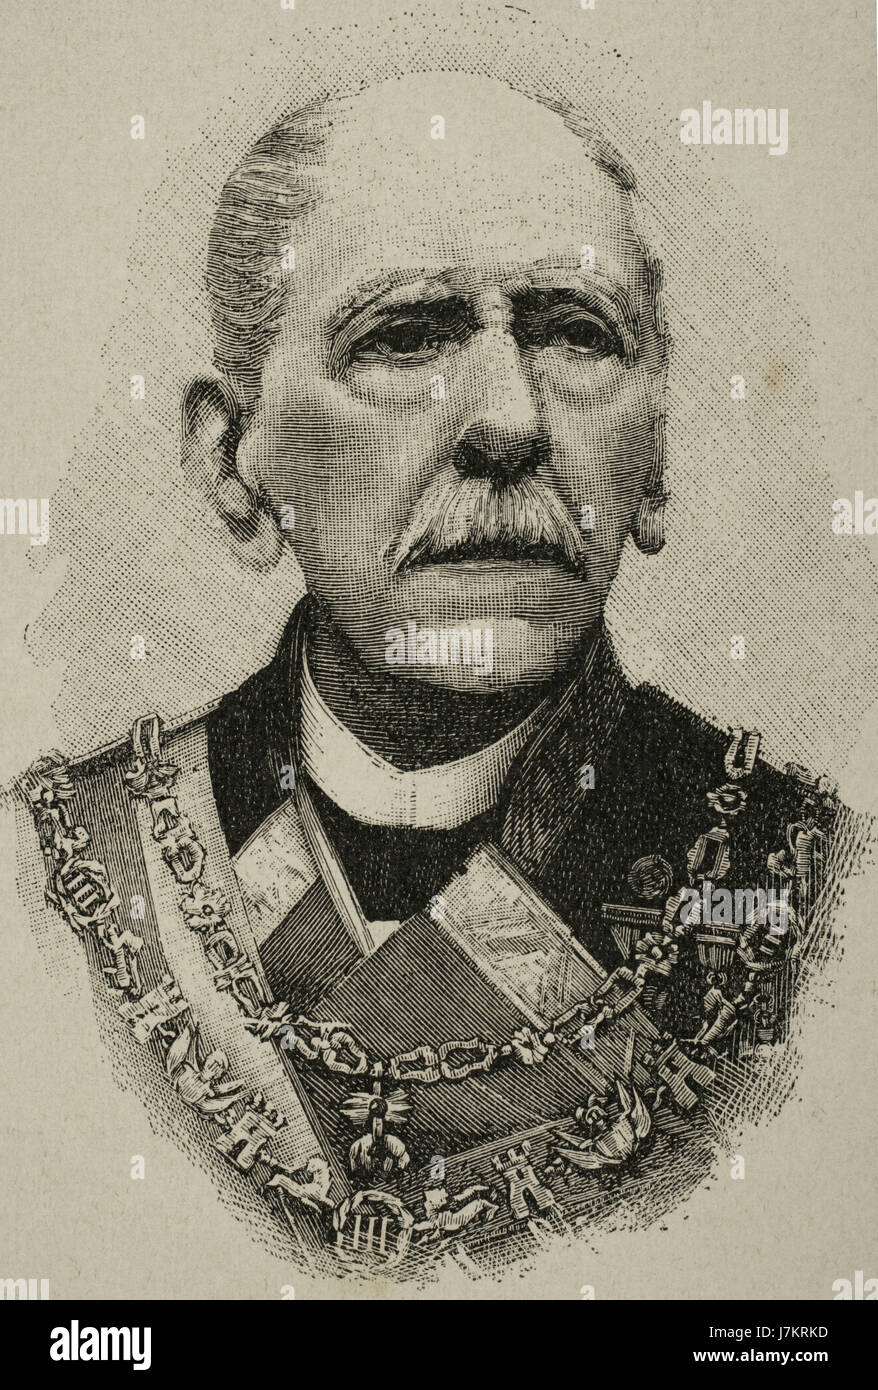 Guillermo Chacon Maldonado (1813-1899). Politician and Admiral General of the Spanish Navy during the Bourbon Restoration in Spain. Portrait. Engraving. 'La Ilustración Artistica', 1899. Stock Photo